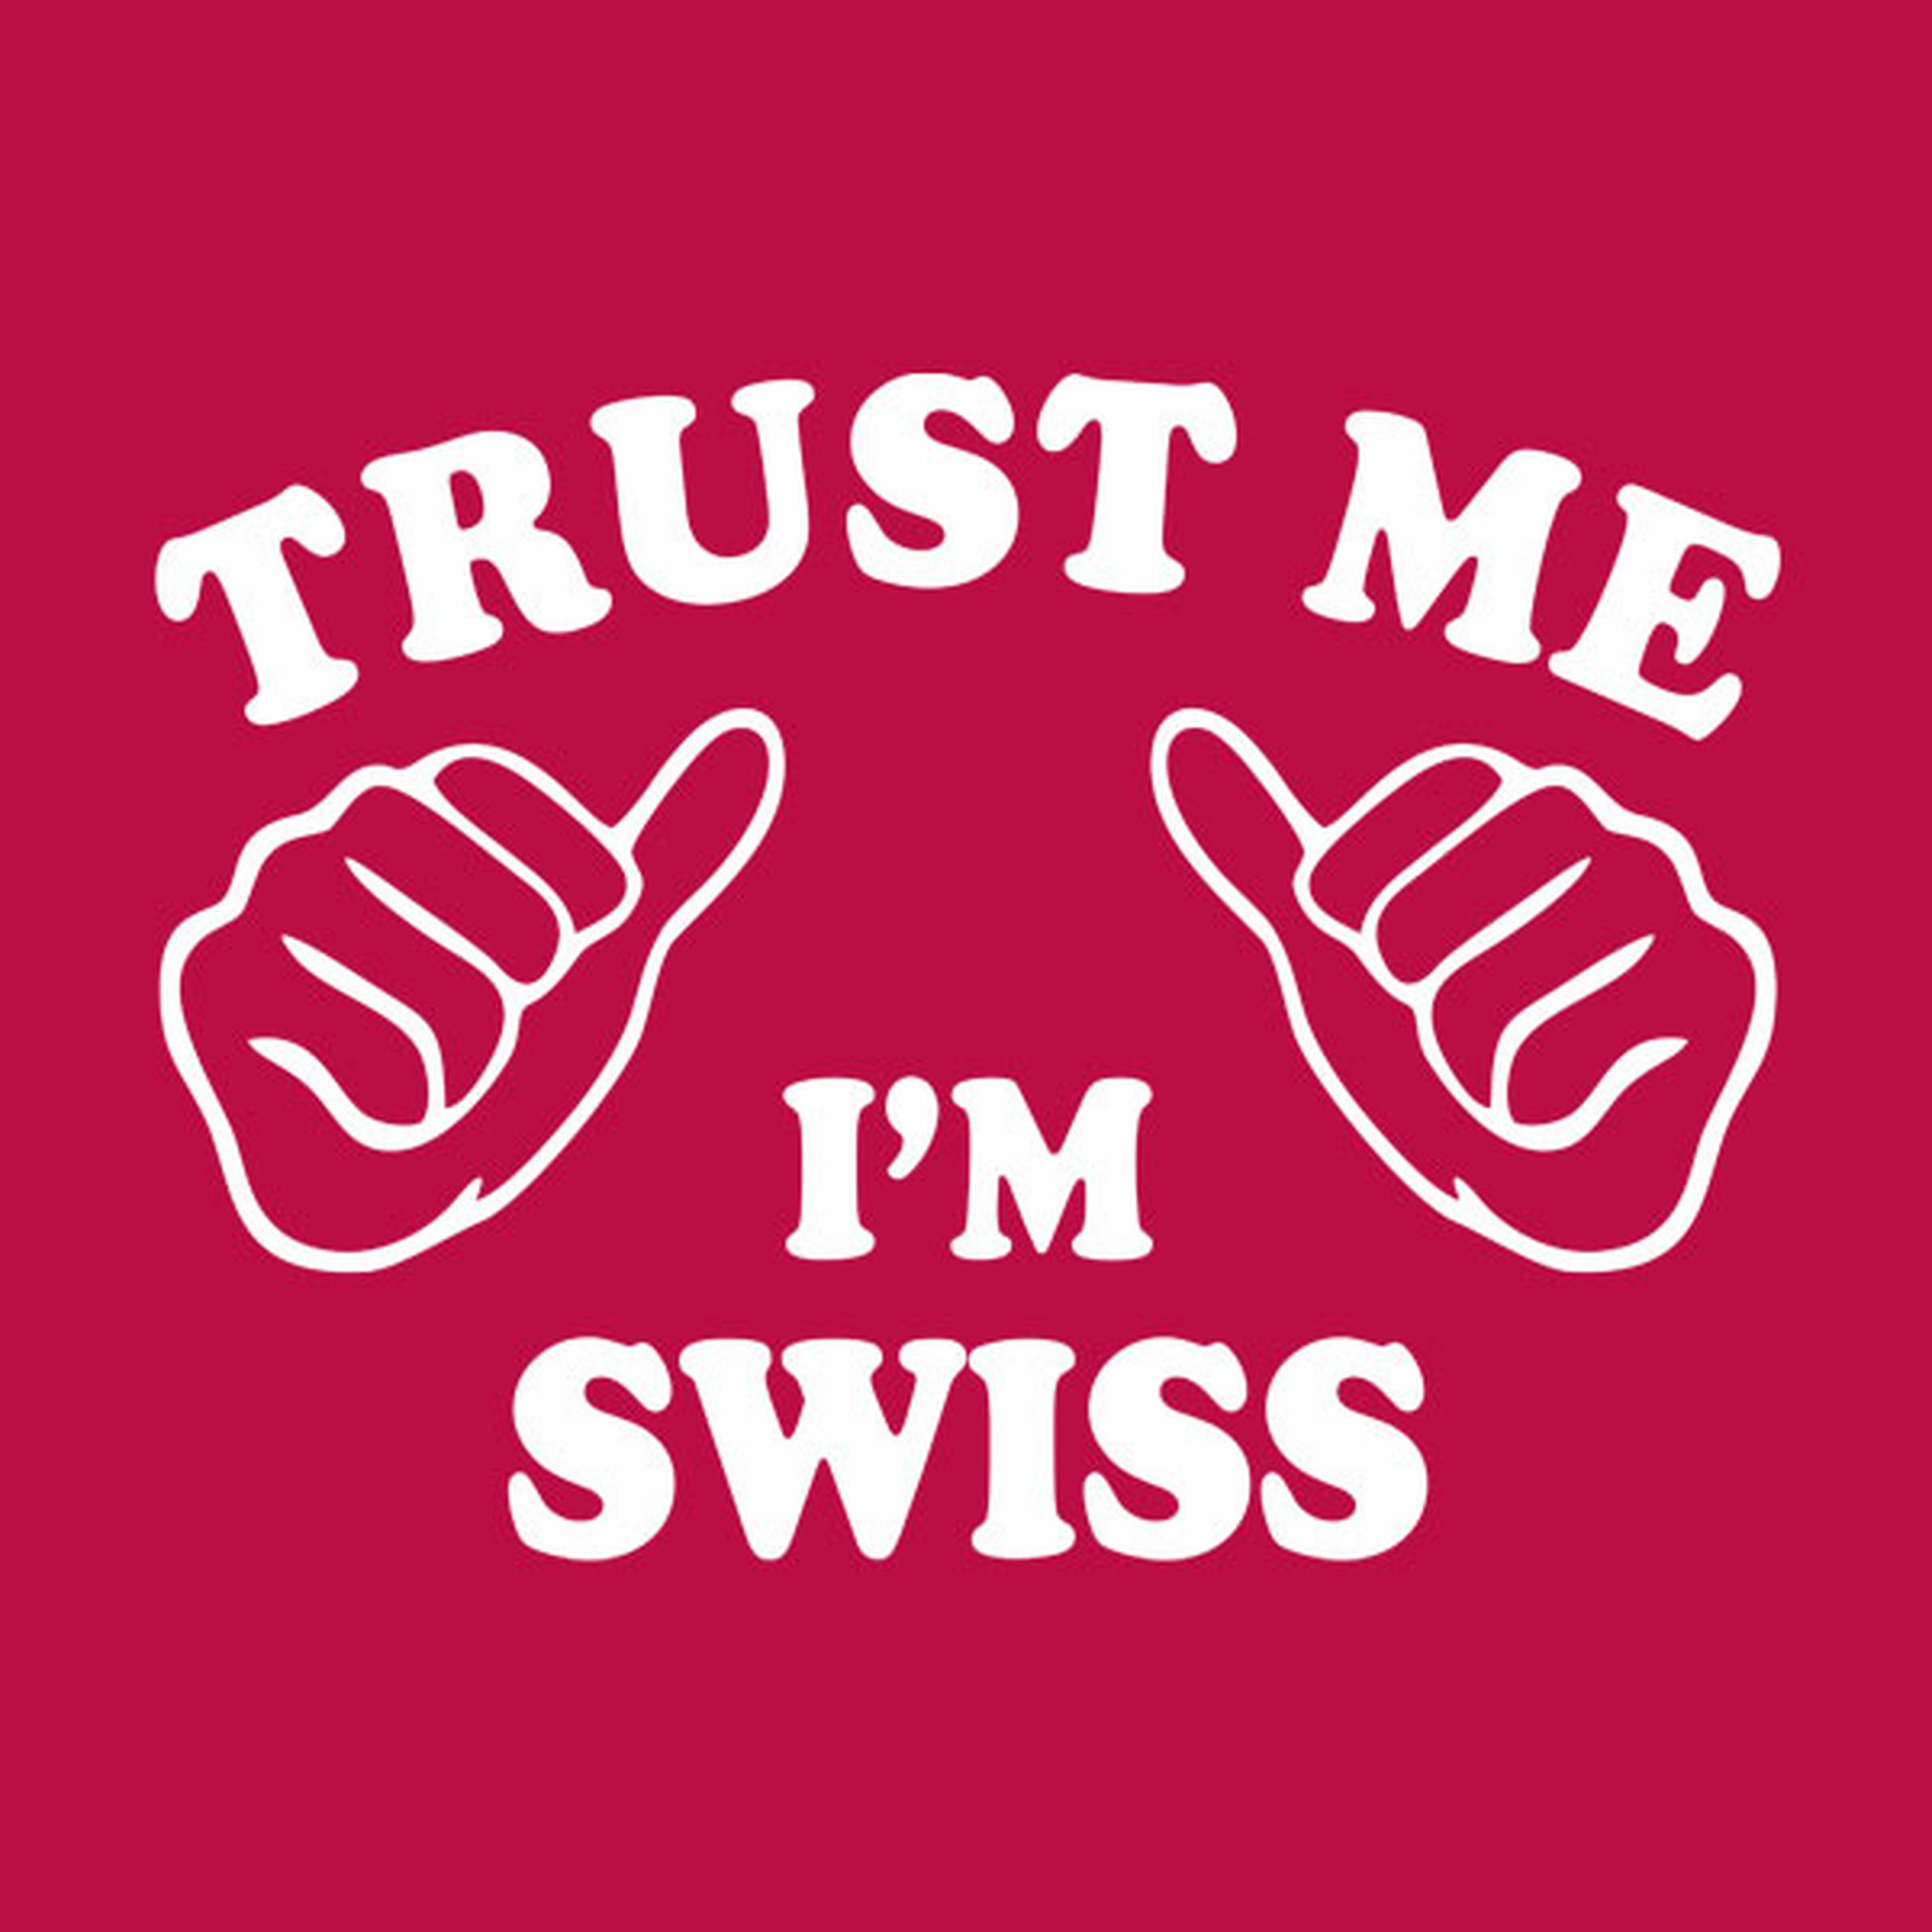 Trust me - I am Swiss